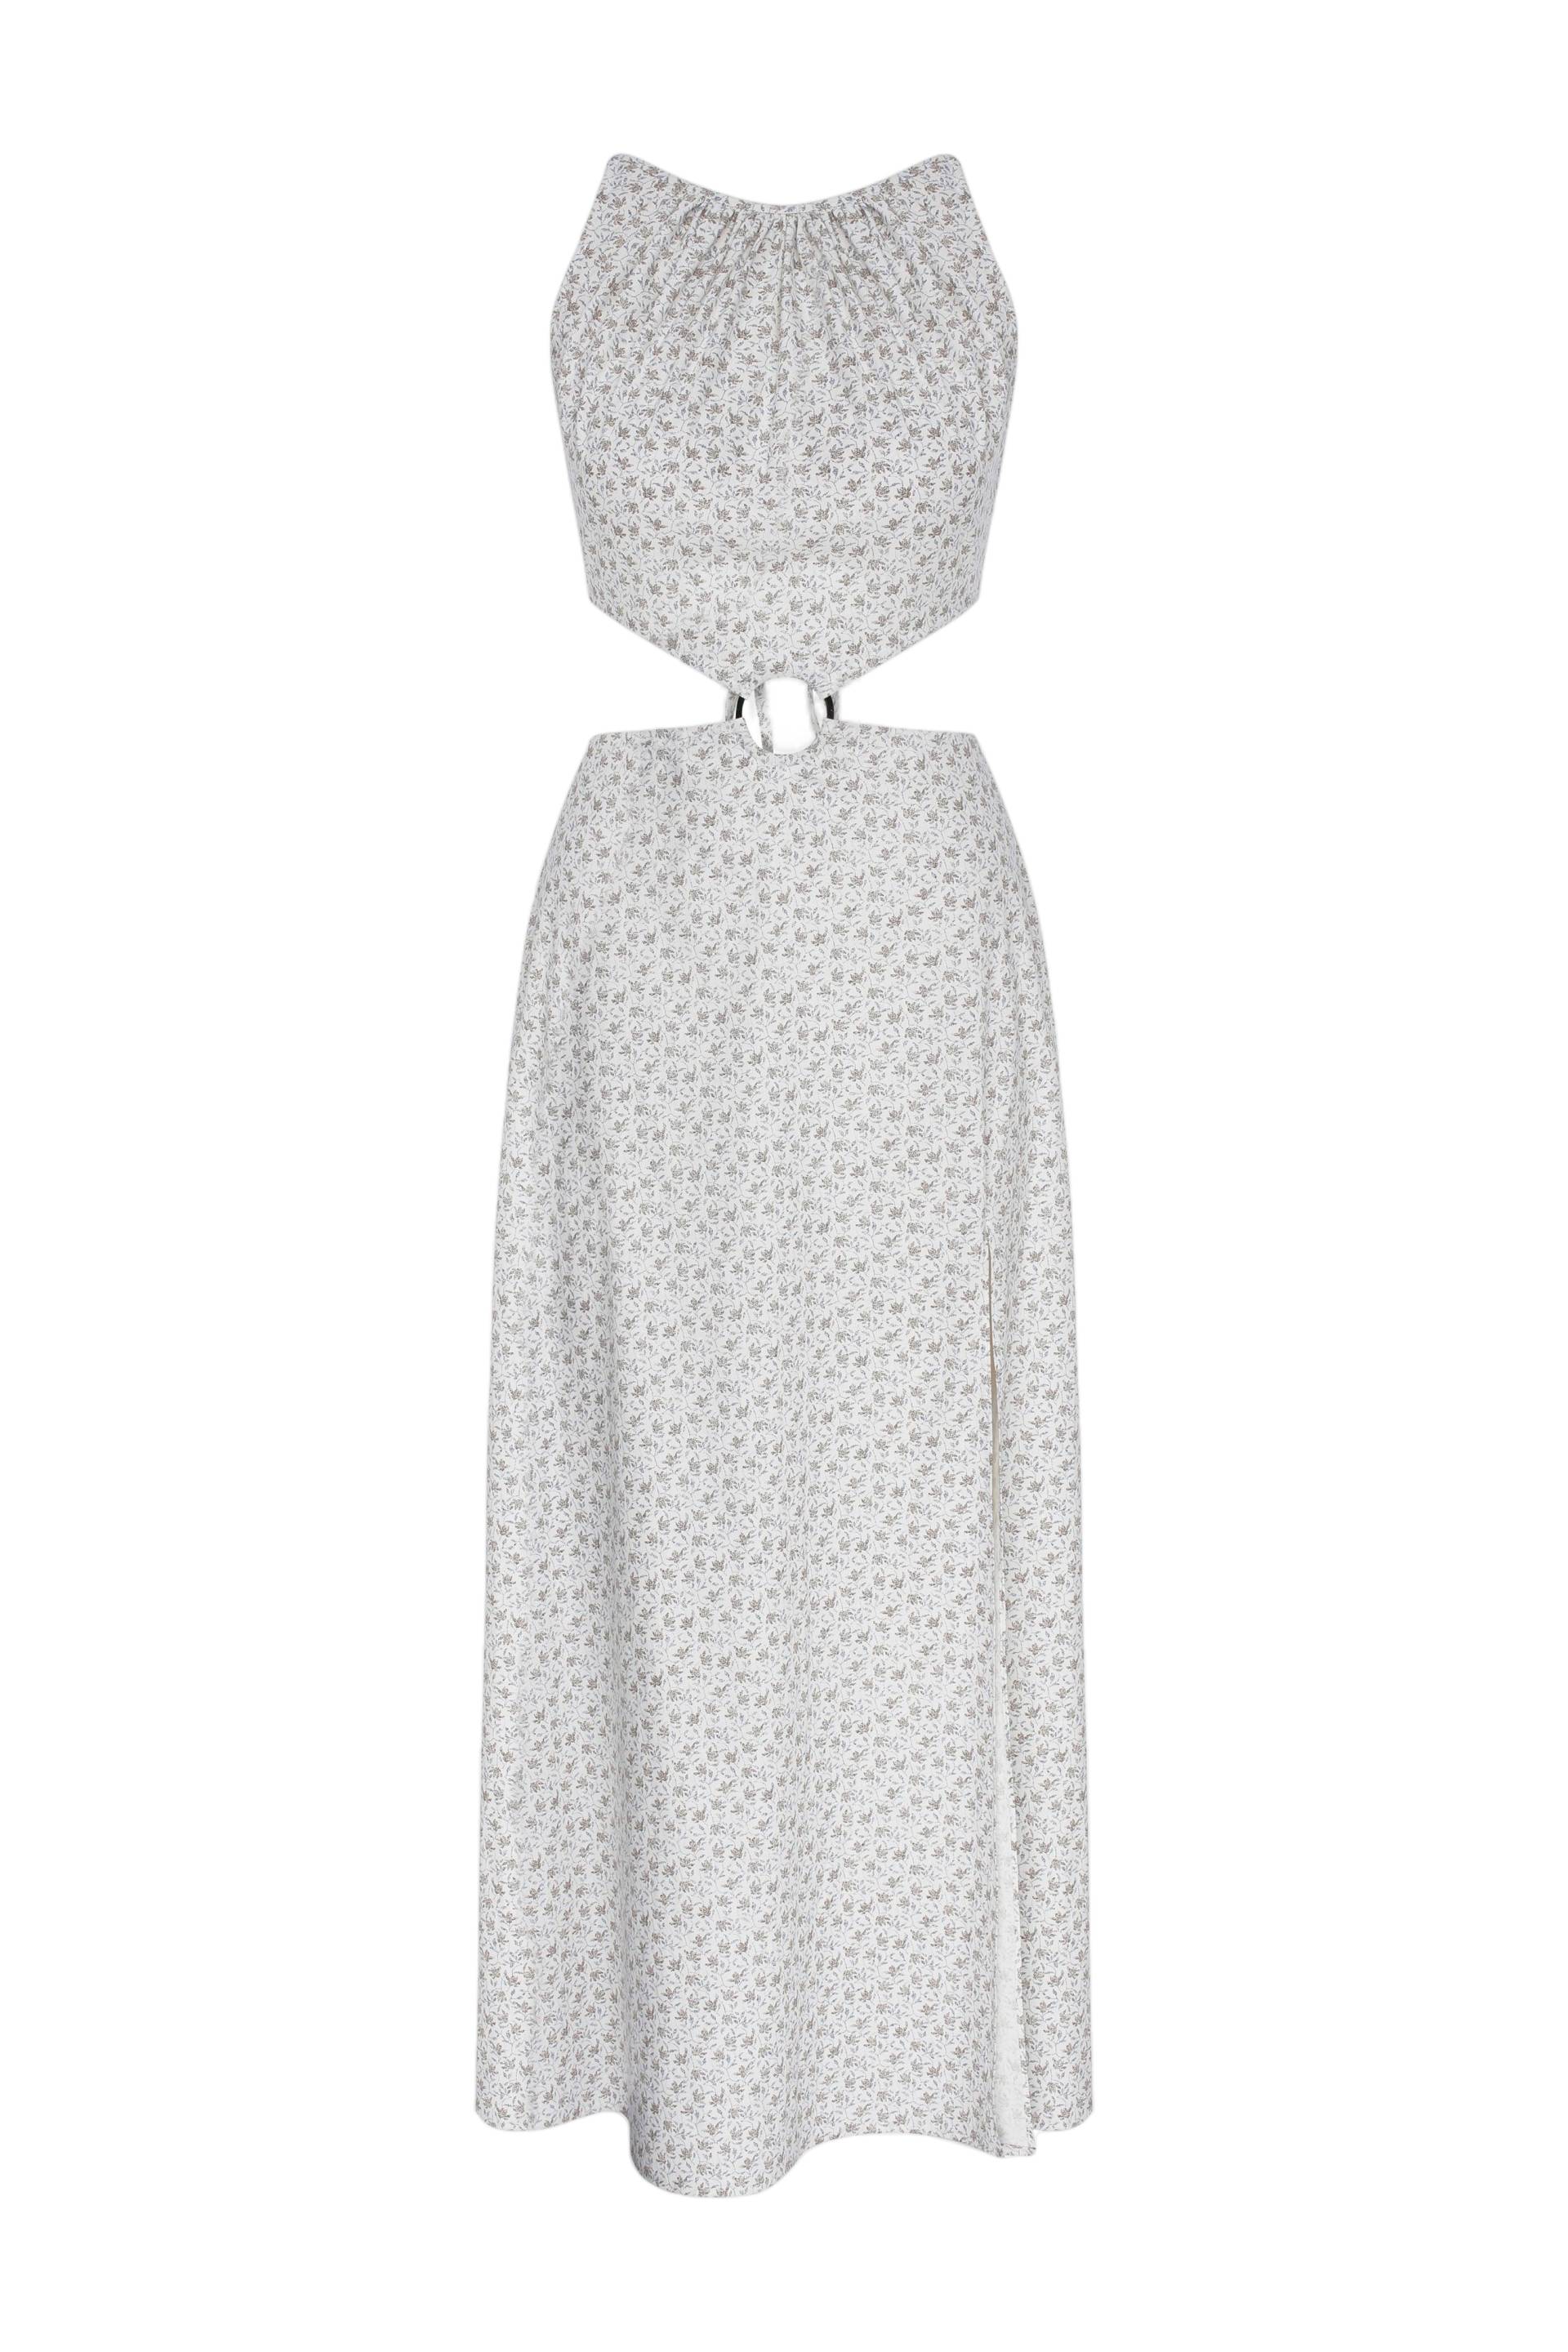 Eloise Ring Embellished Cotton Dress von Nazli Ceren